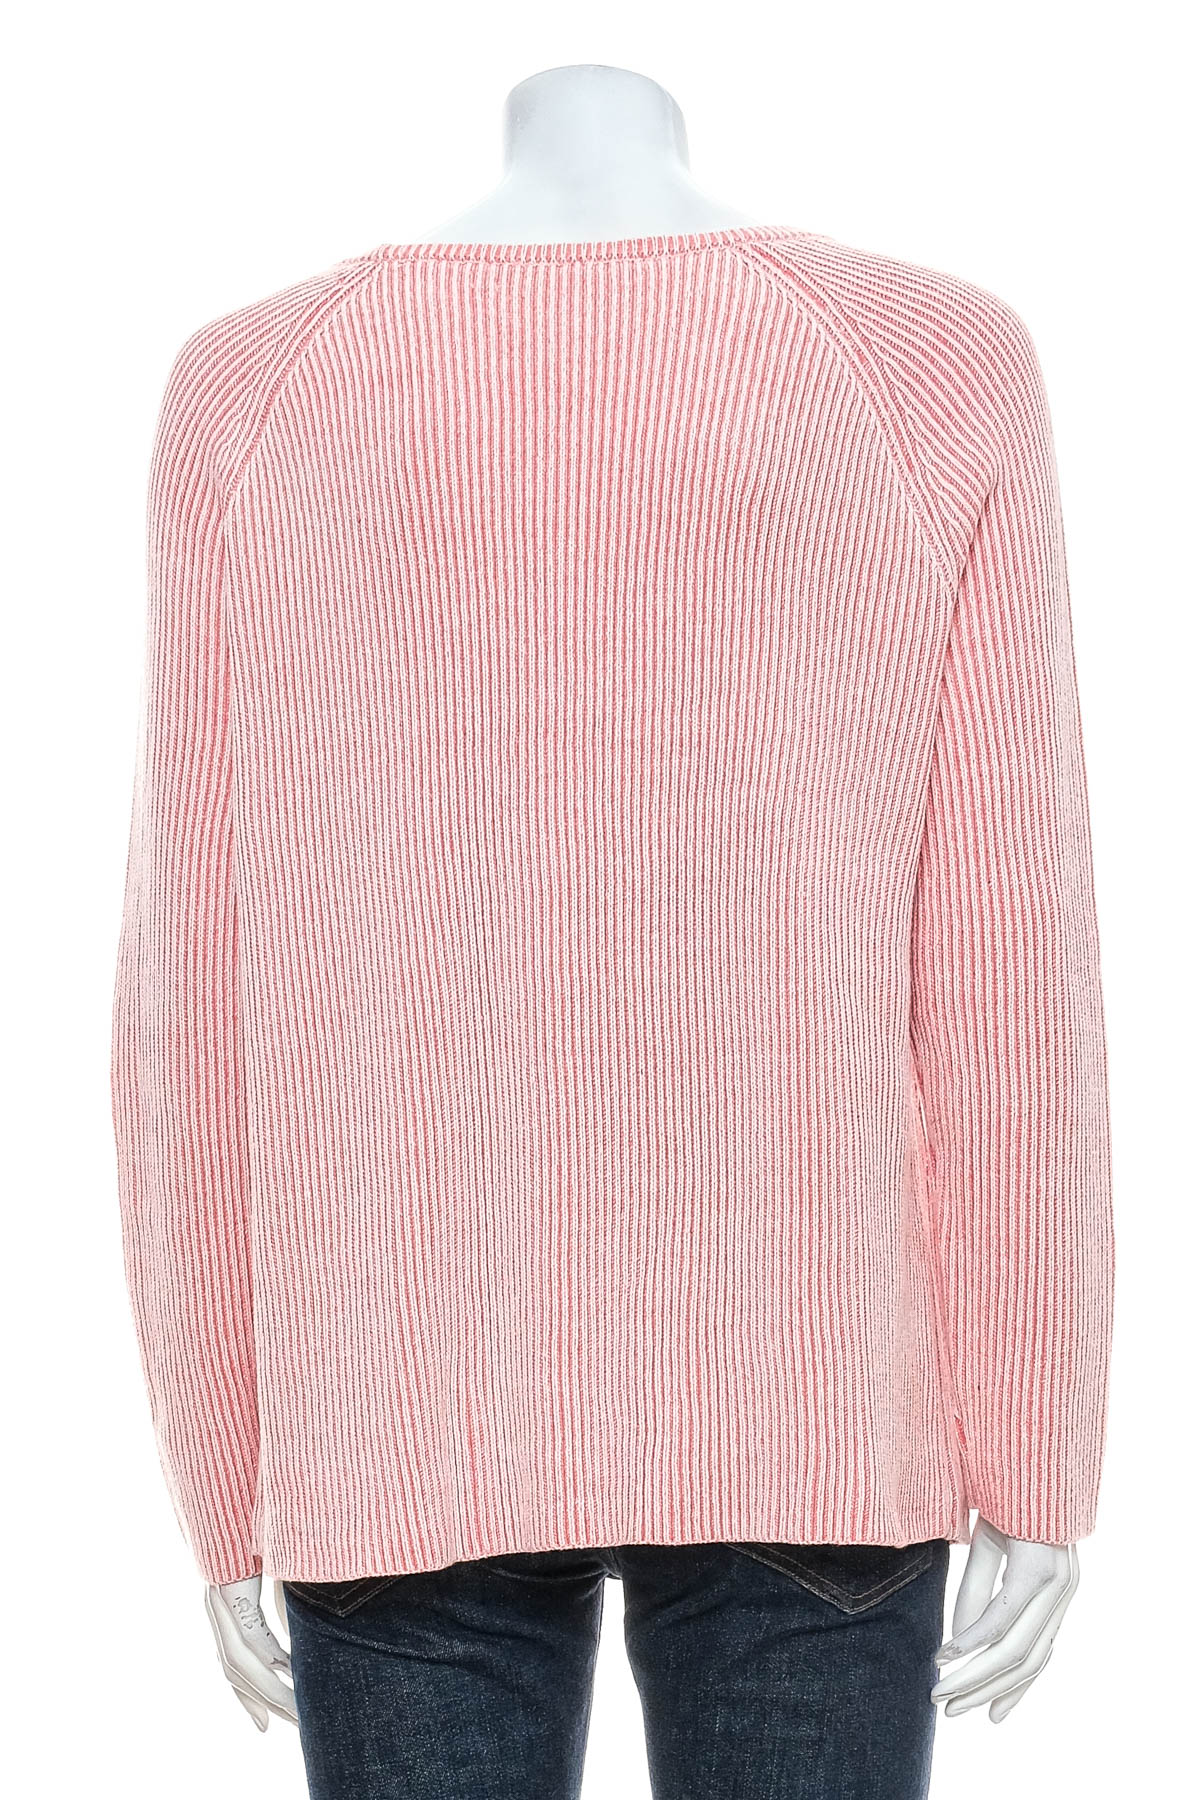 Women's sweater - Betty Barclay - 1